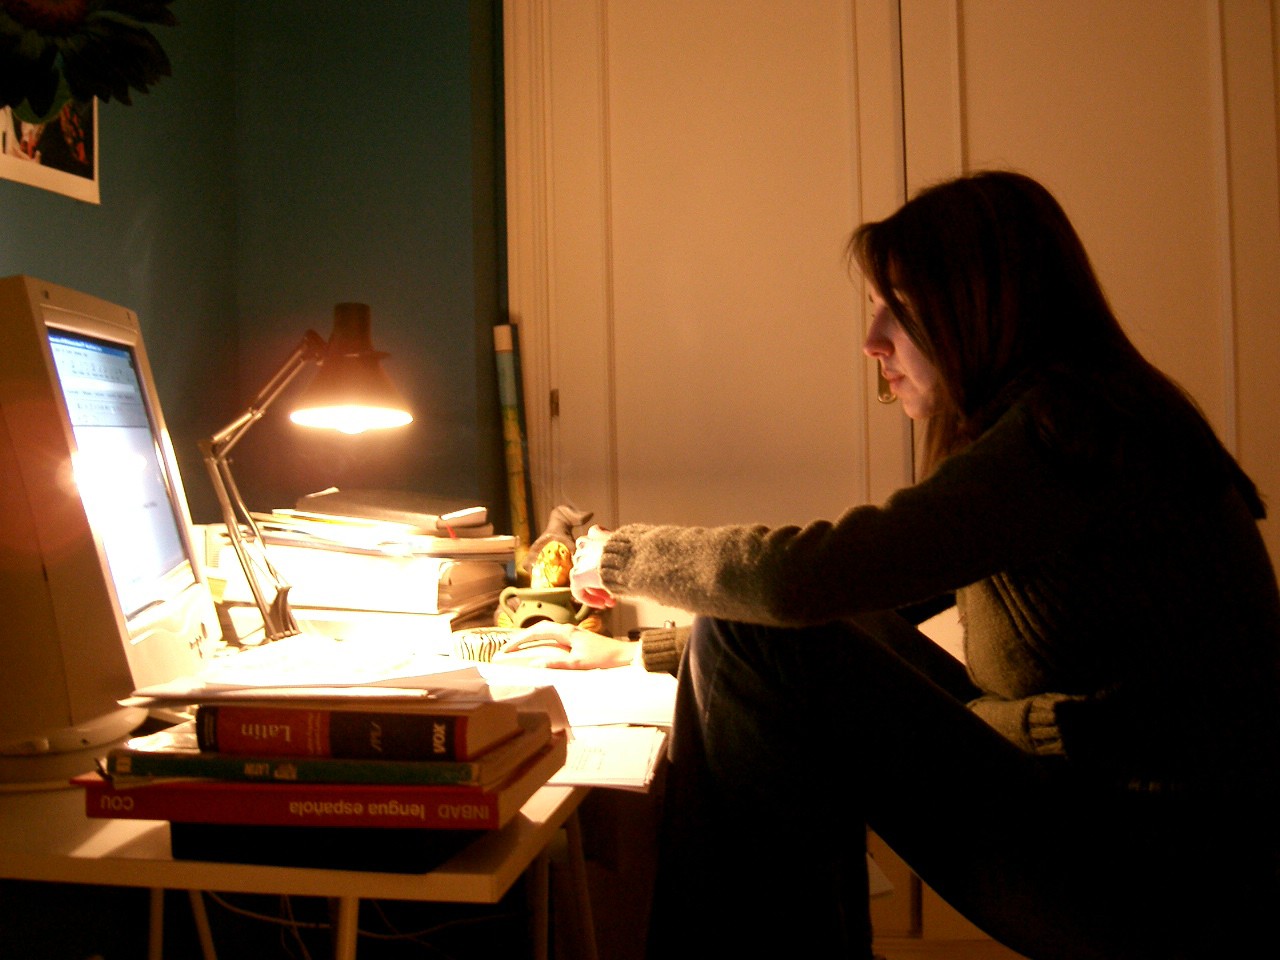 Поздно вечером с работы. Девушка сидит за компьютером. Девочка сидит за компьютером. Человек перед компьютером. Сидит за компьютером ночью.